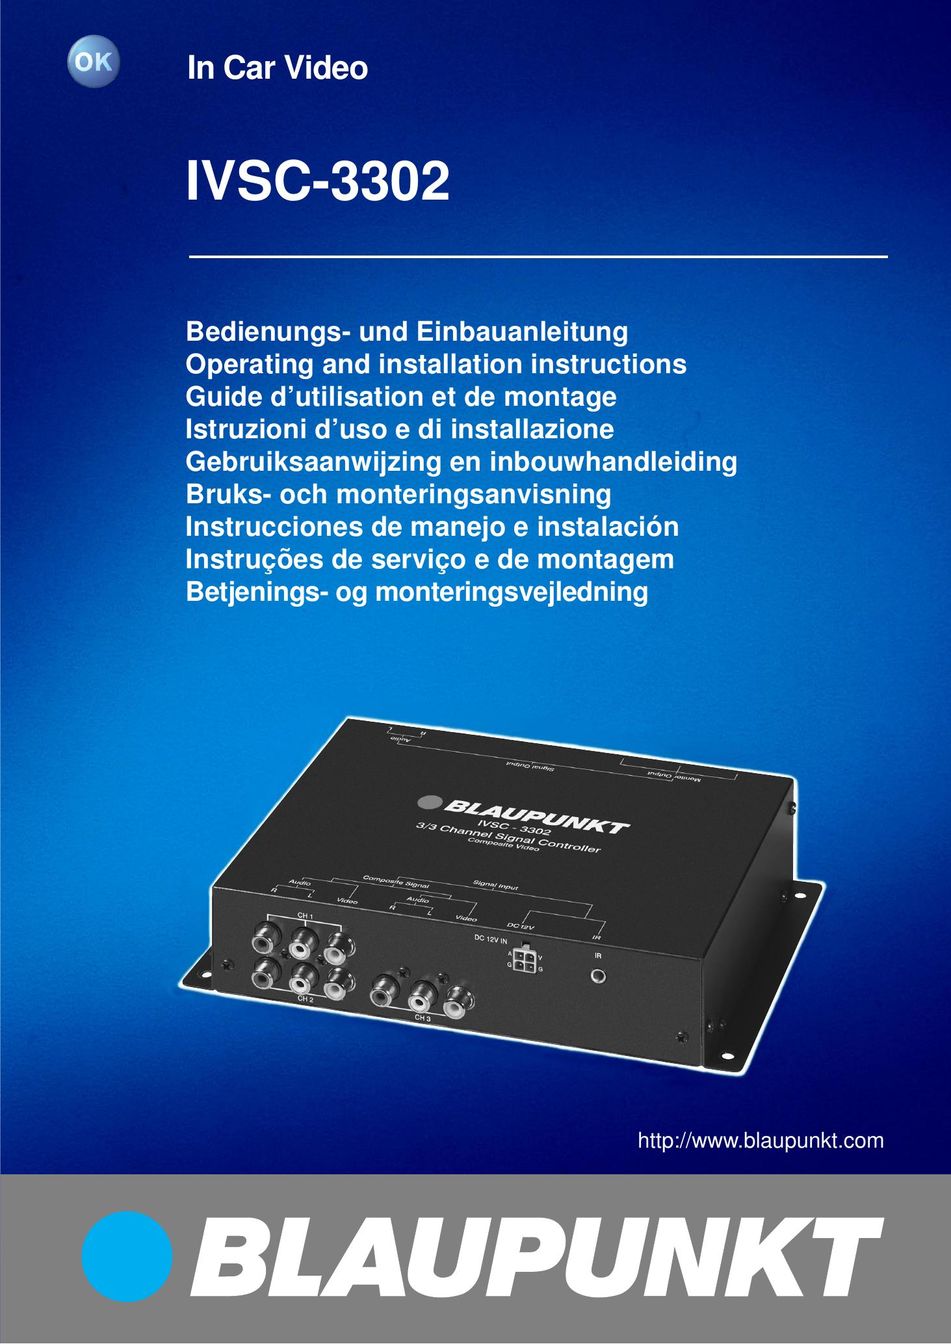 Blaupunkt IVSC-3302 Car Video System User Manual